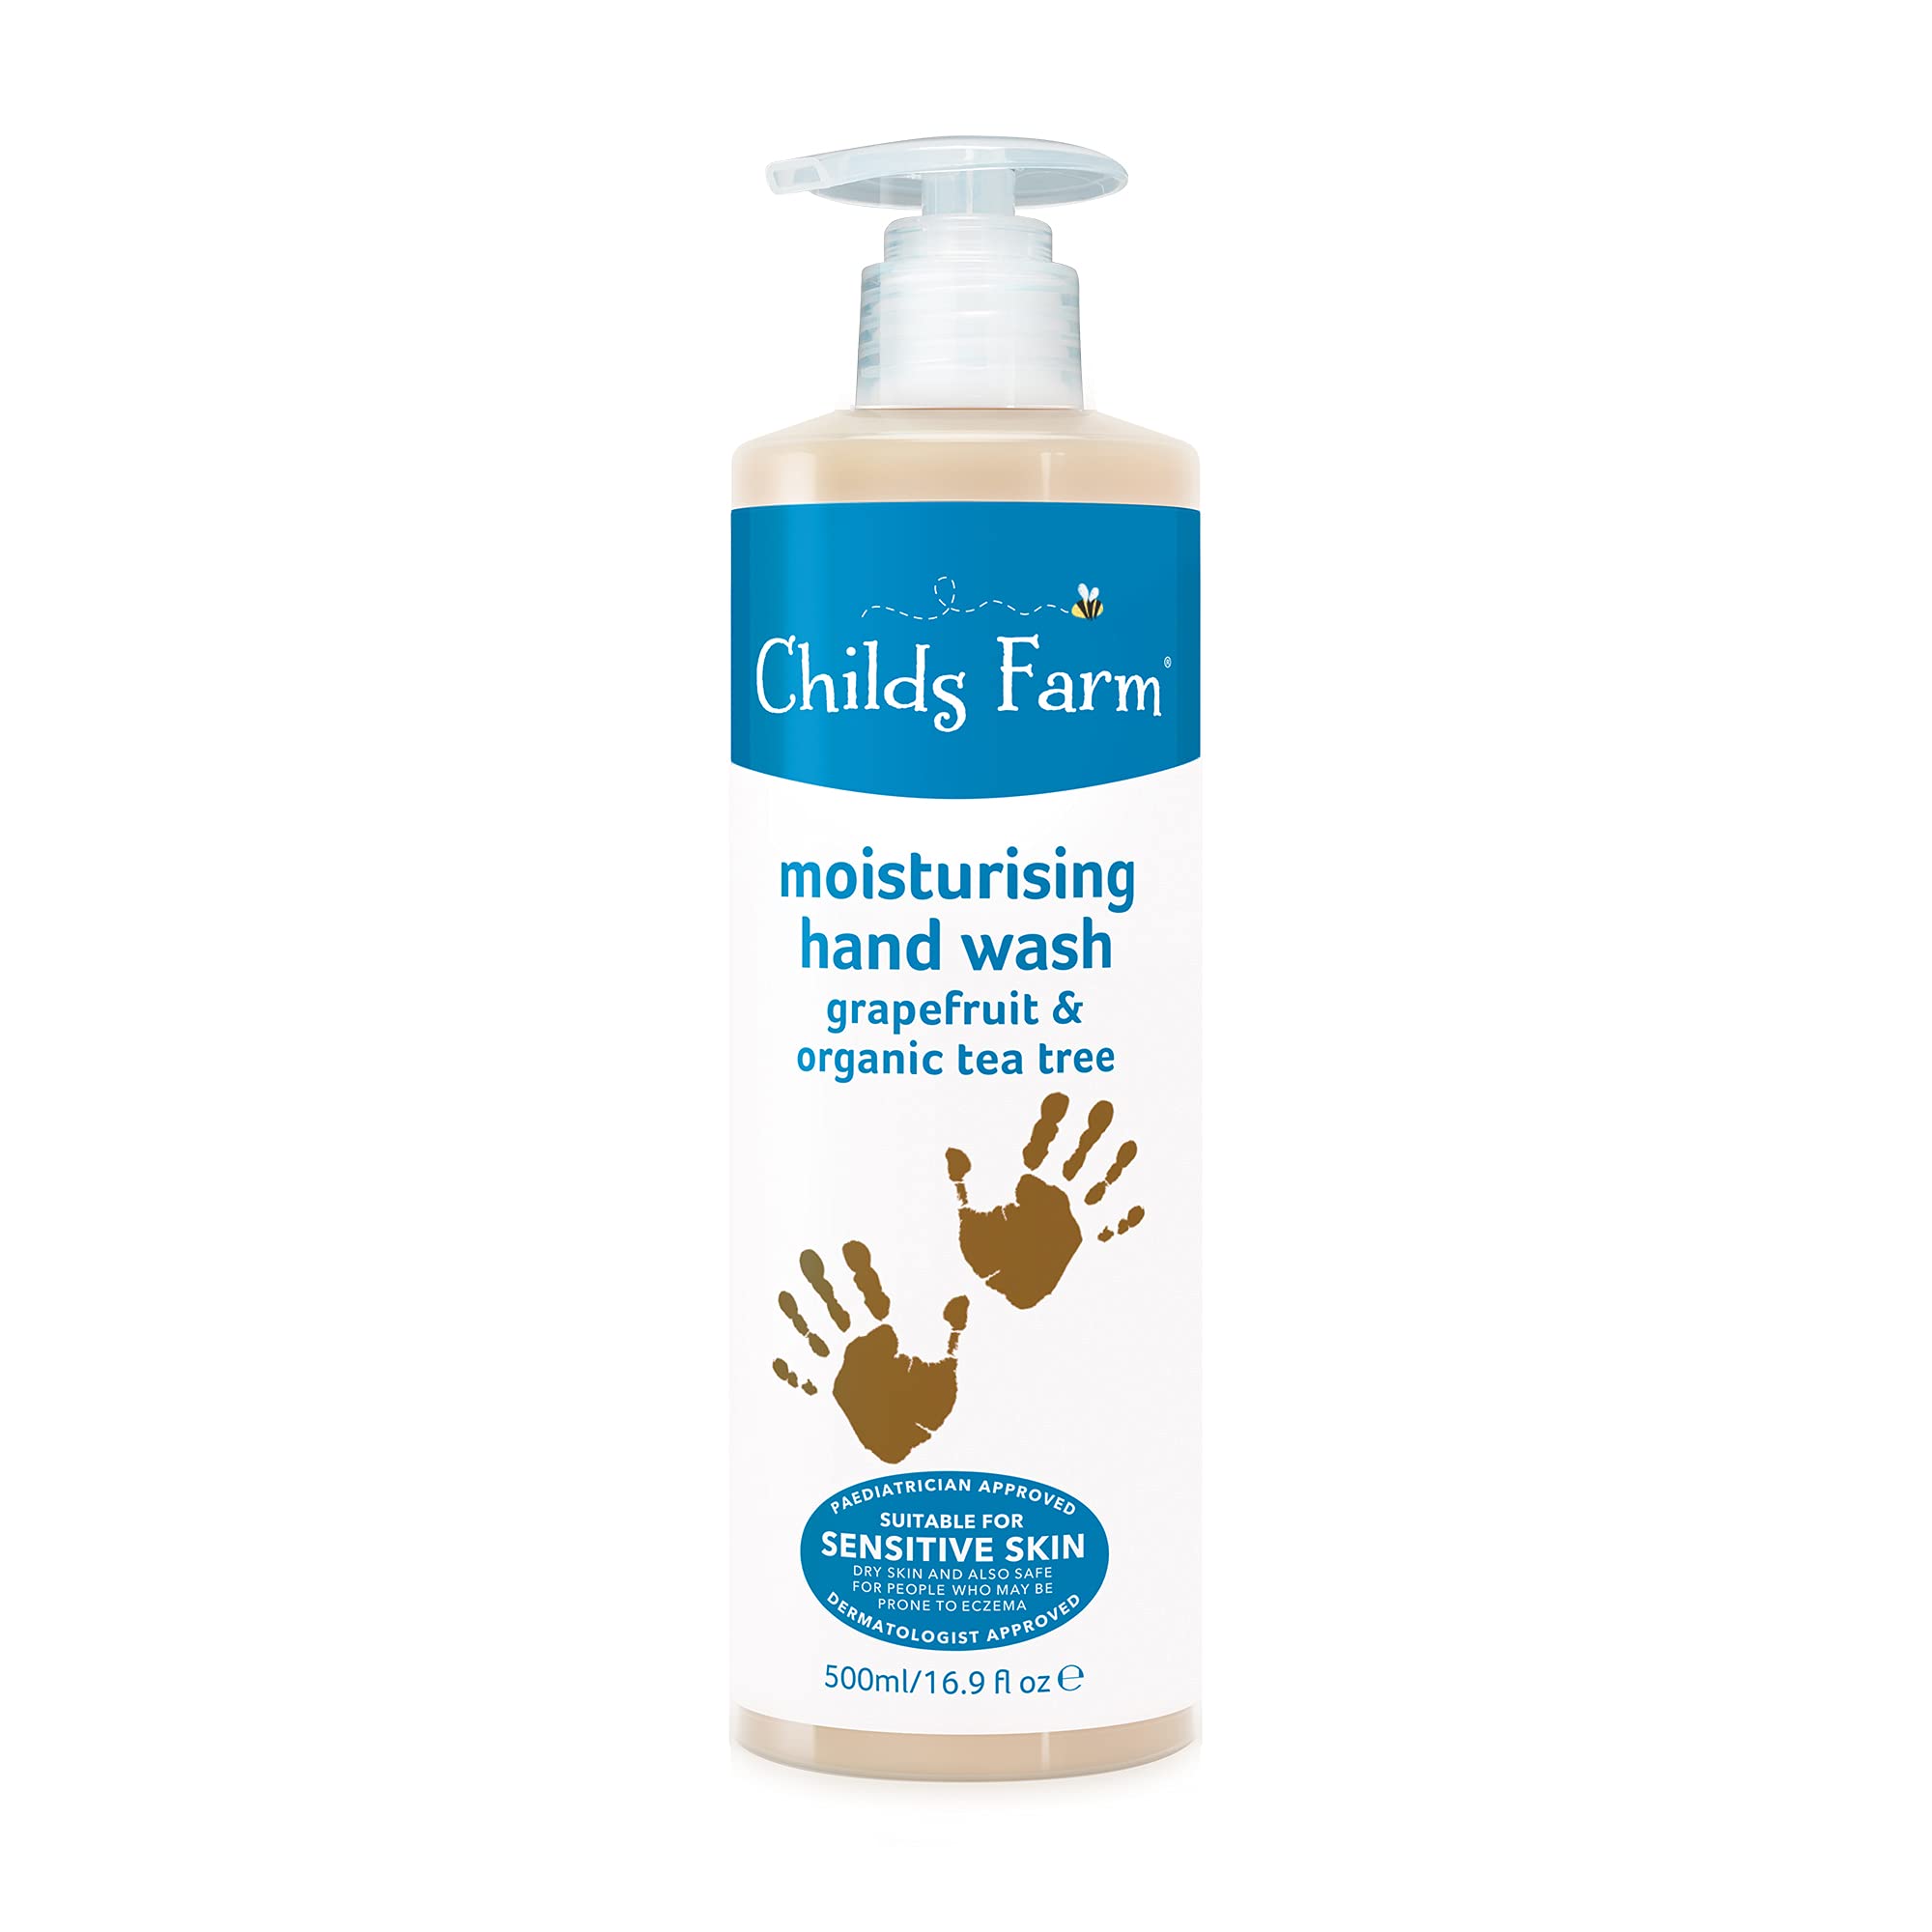 CHILDS FARM Hand Wash - Grapefruit and Organic Tea Tree Oil, 500ml